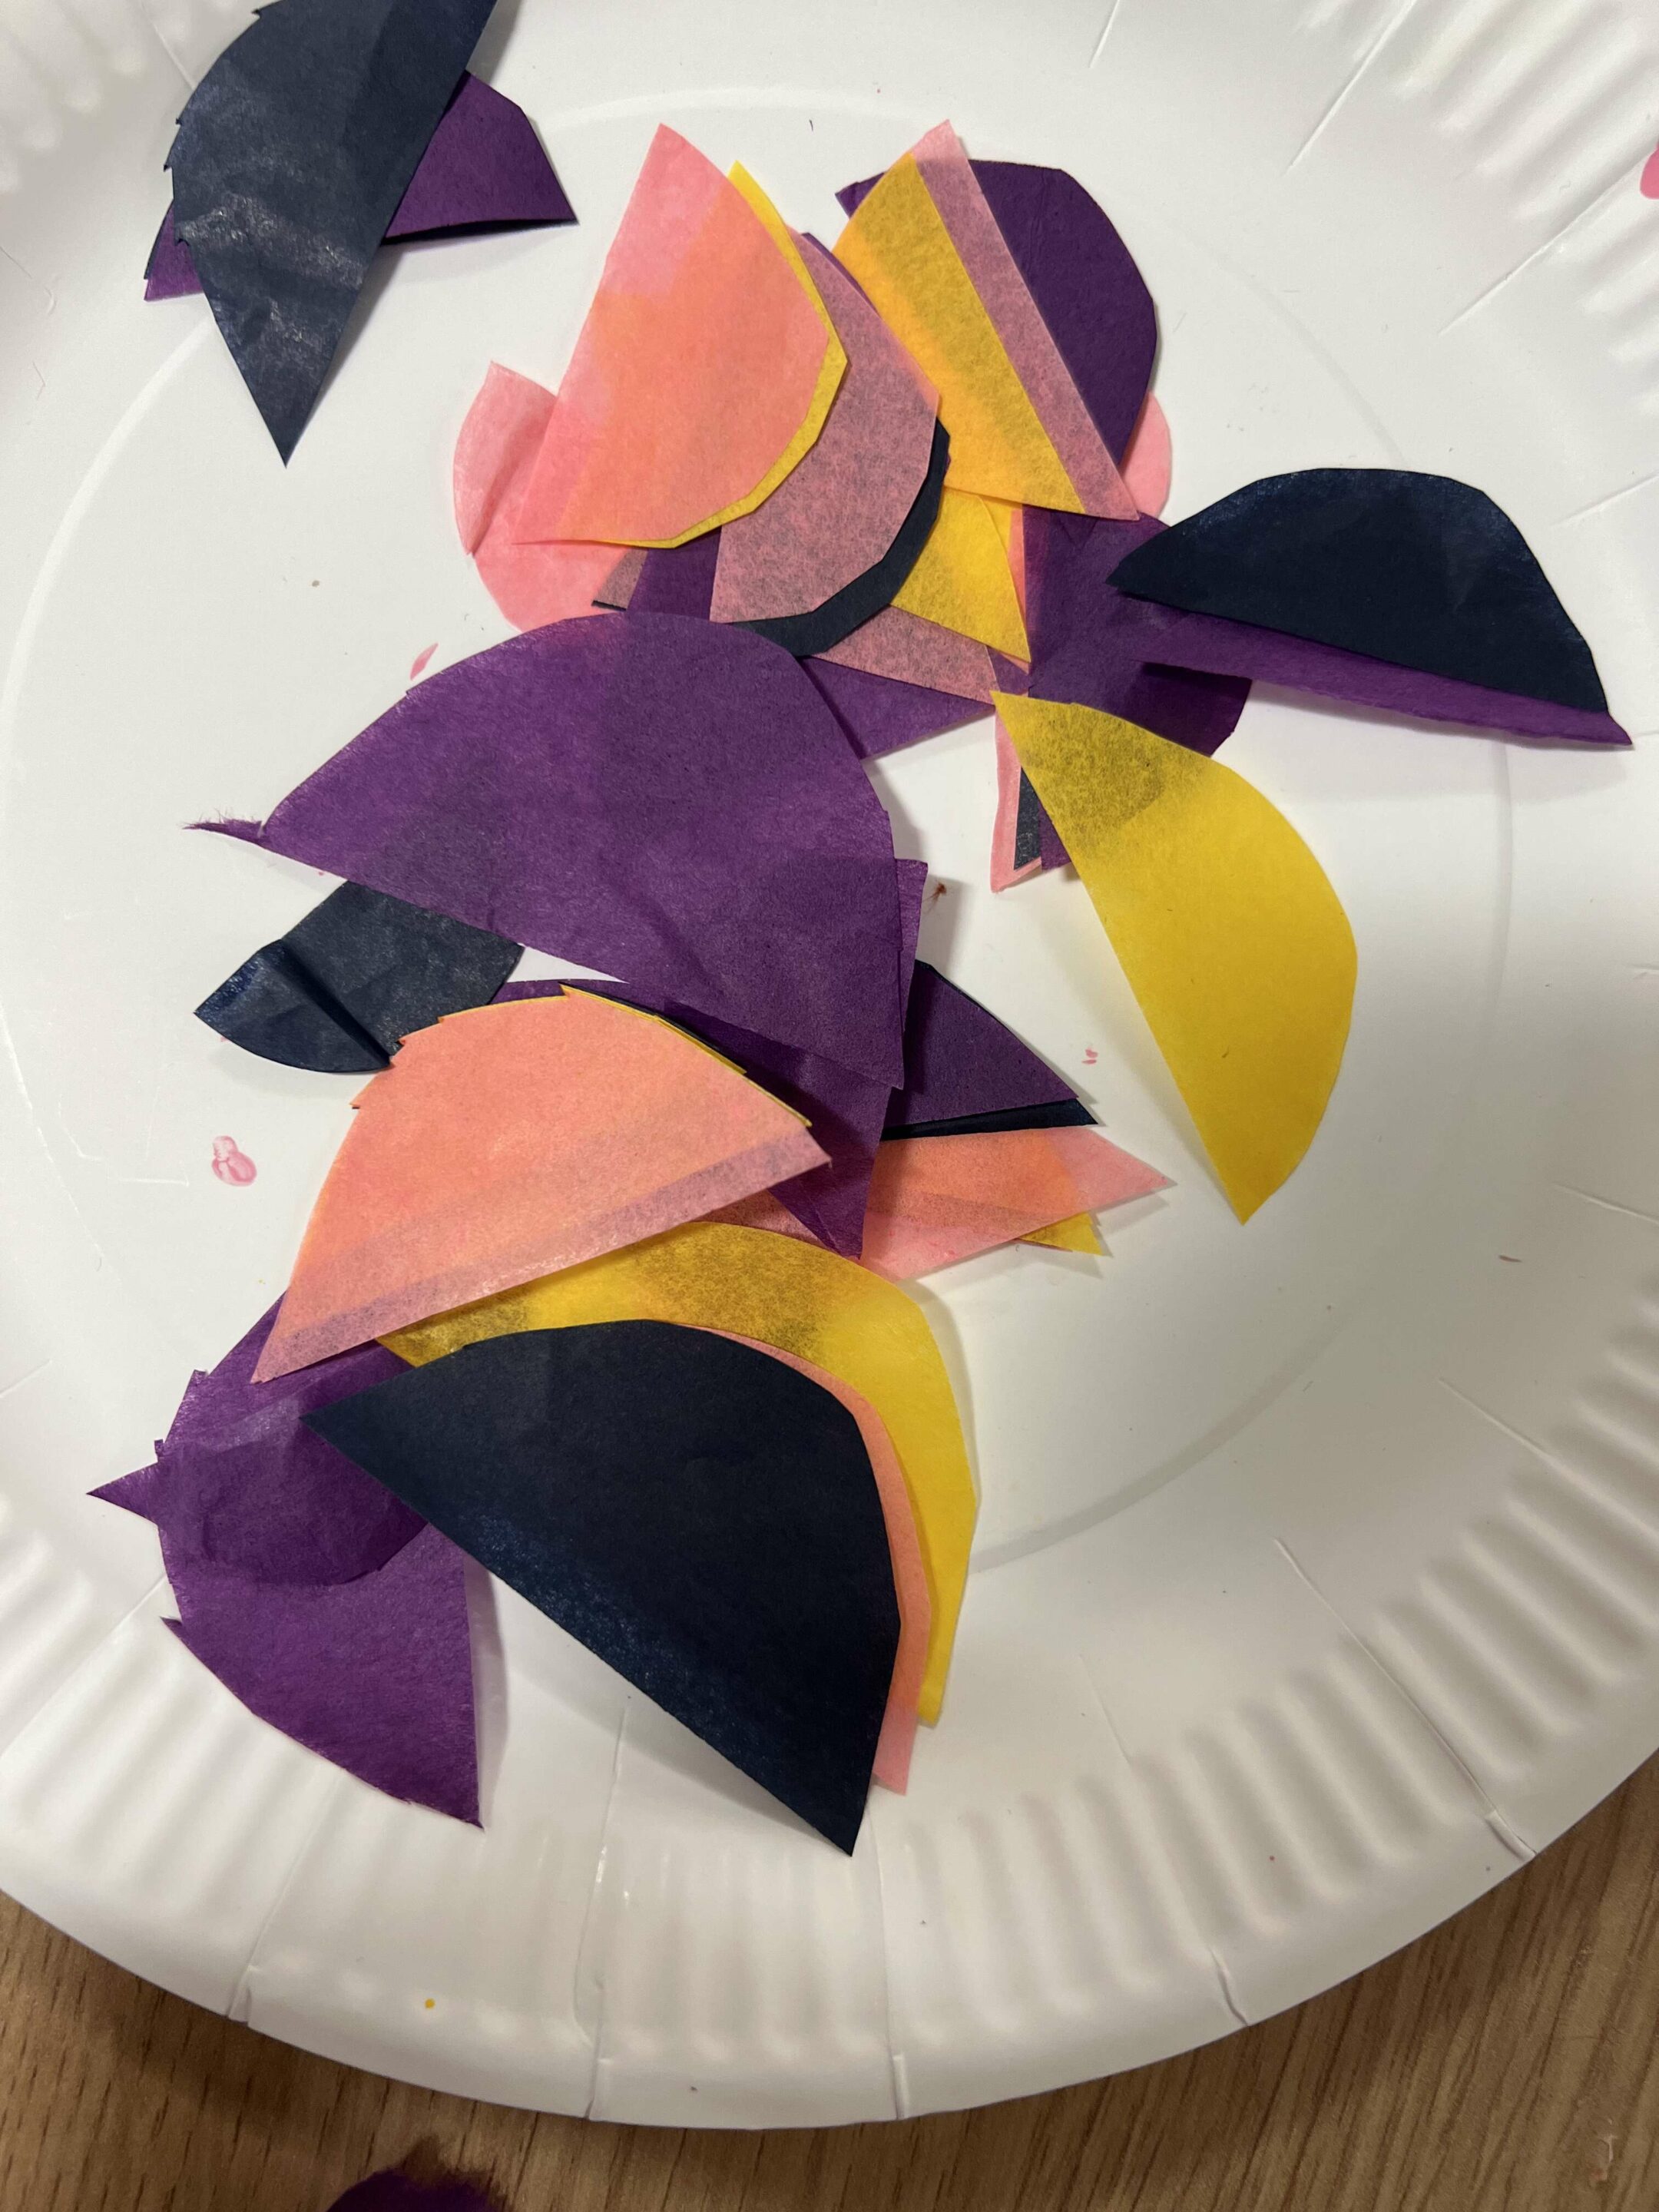 Tissue paper cut into semi-circles